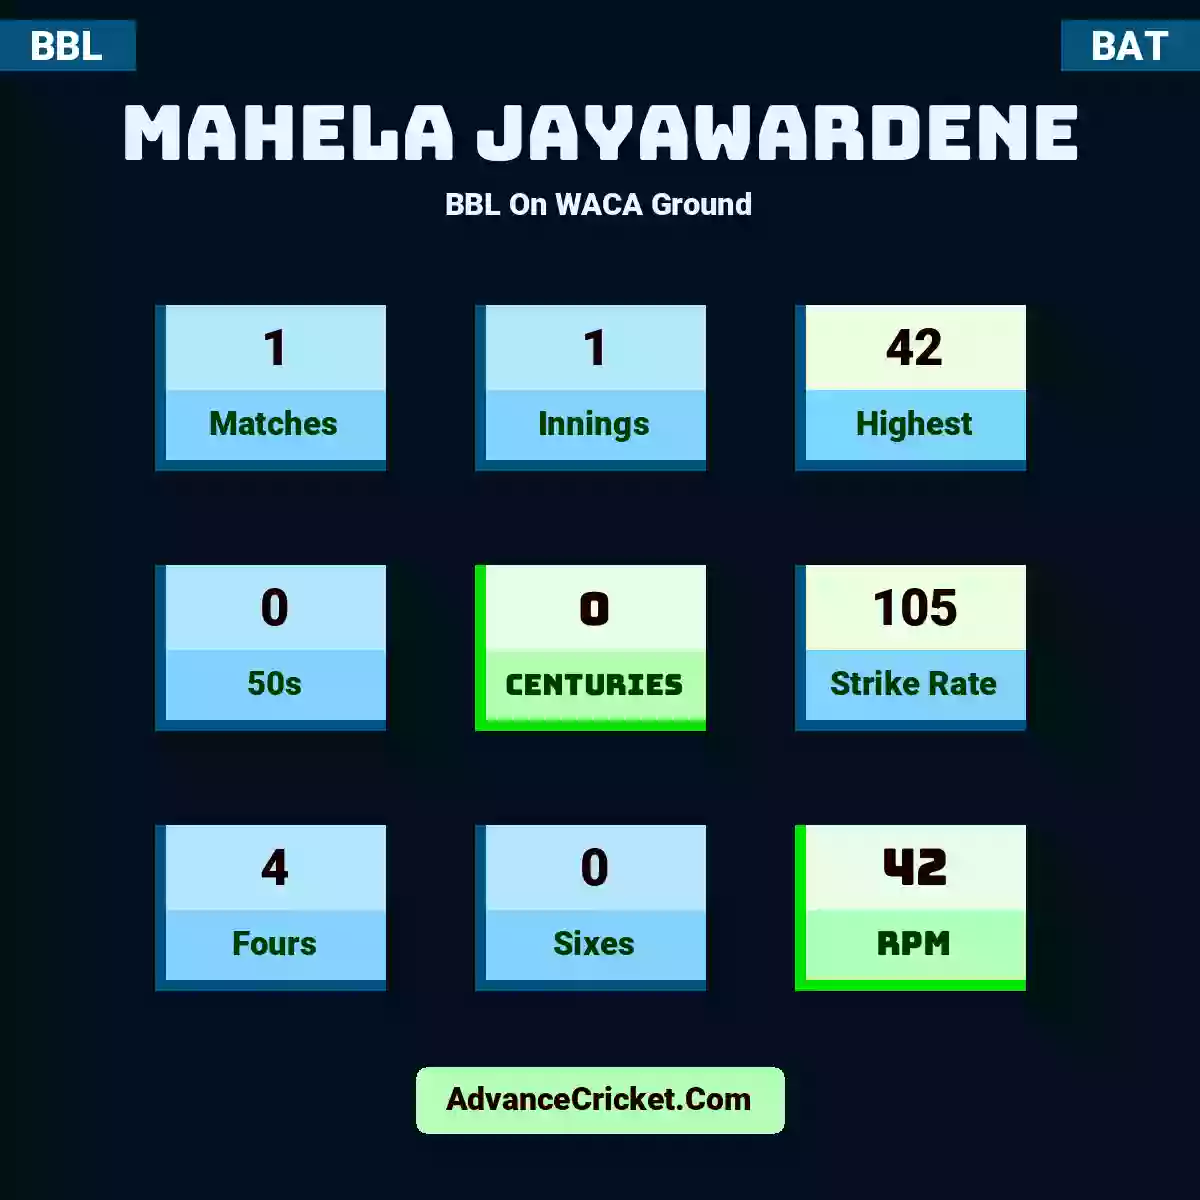 Mahela Jayawardene BBL  On WACA Ground, Mahela Jayawardene played 1 matches, scored 42 runs as highest, 0 half-centuries, and 0 centuries, with a strike rate of 105. M.Jayawardene hit 4 fours and 0 sixes, with an RPM of 42.